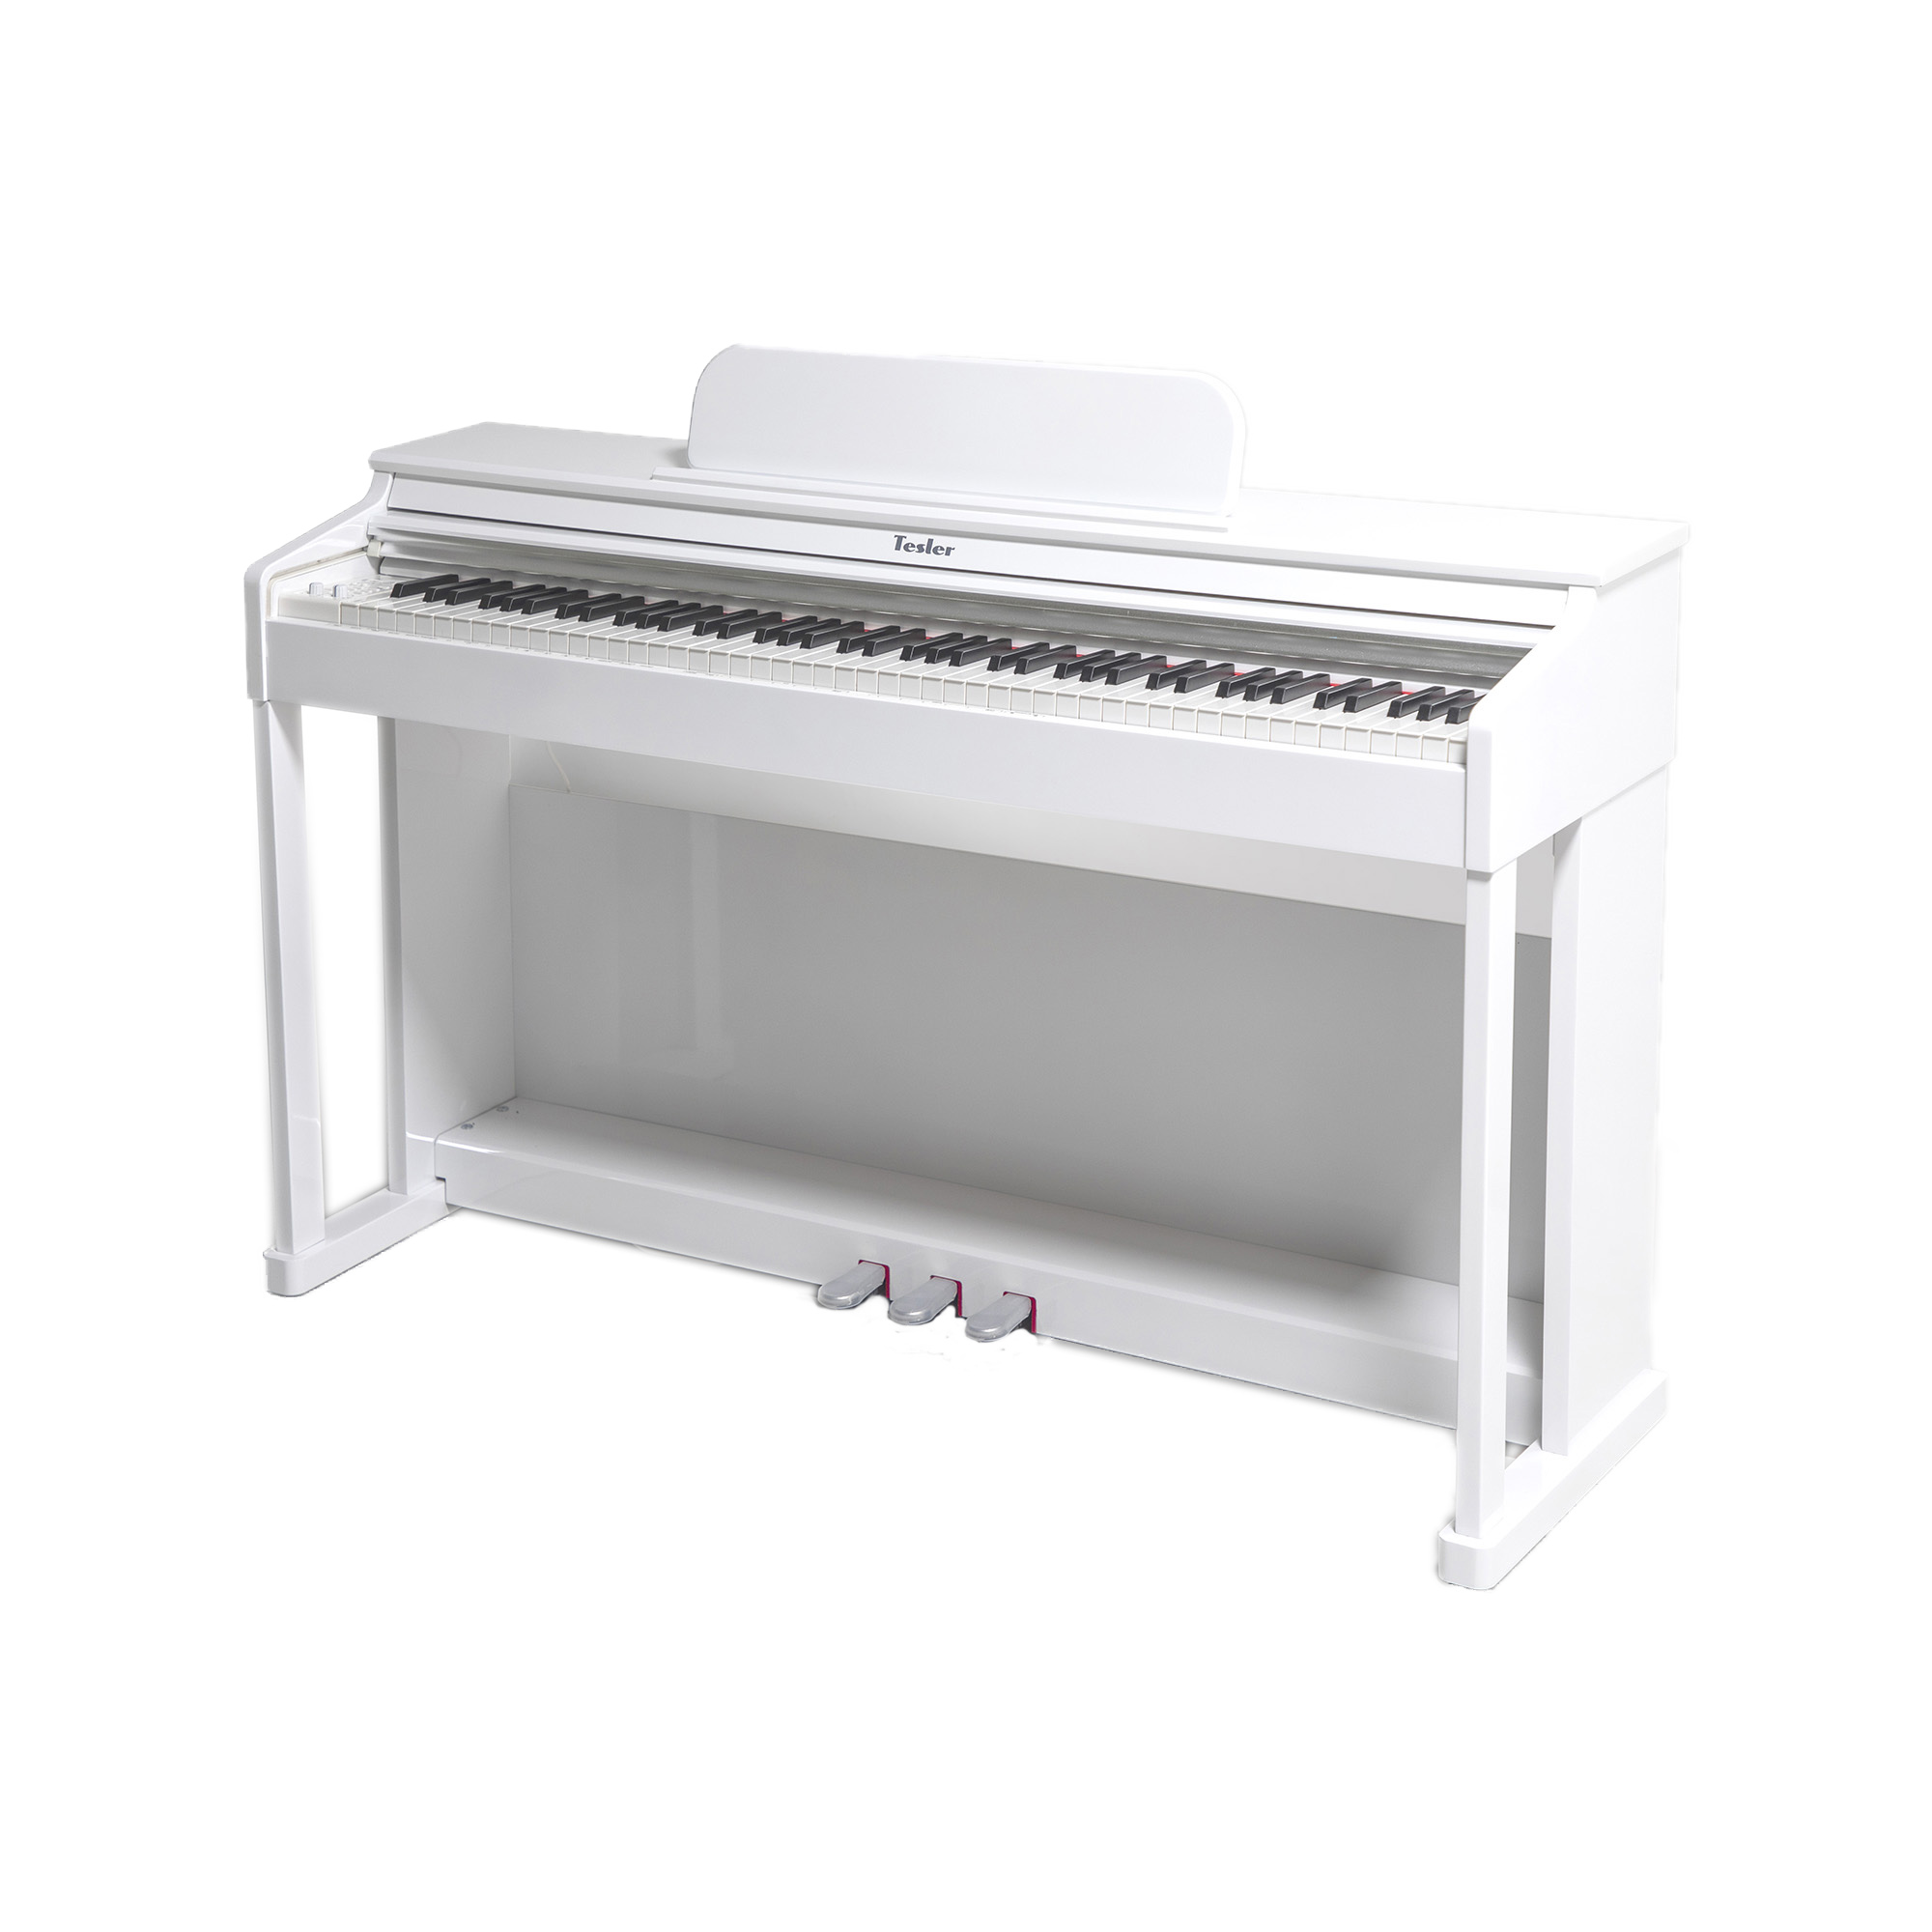 Цифровое пианино TESLER STZ-8810 ROYAL WHITE